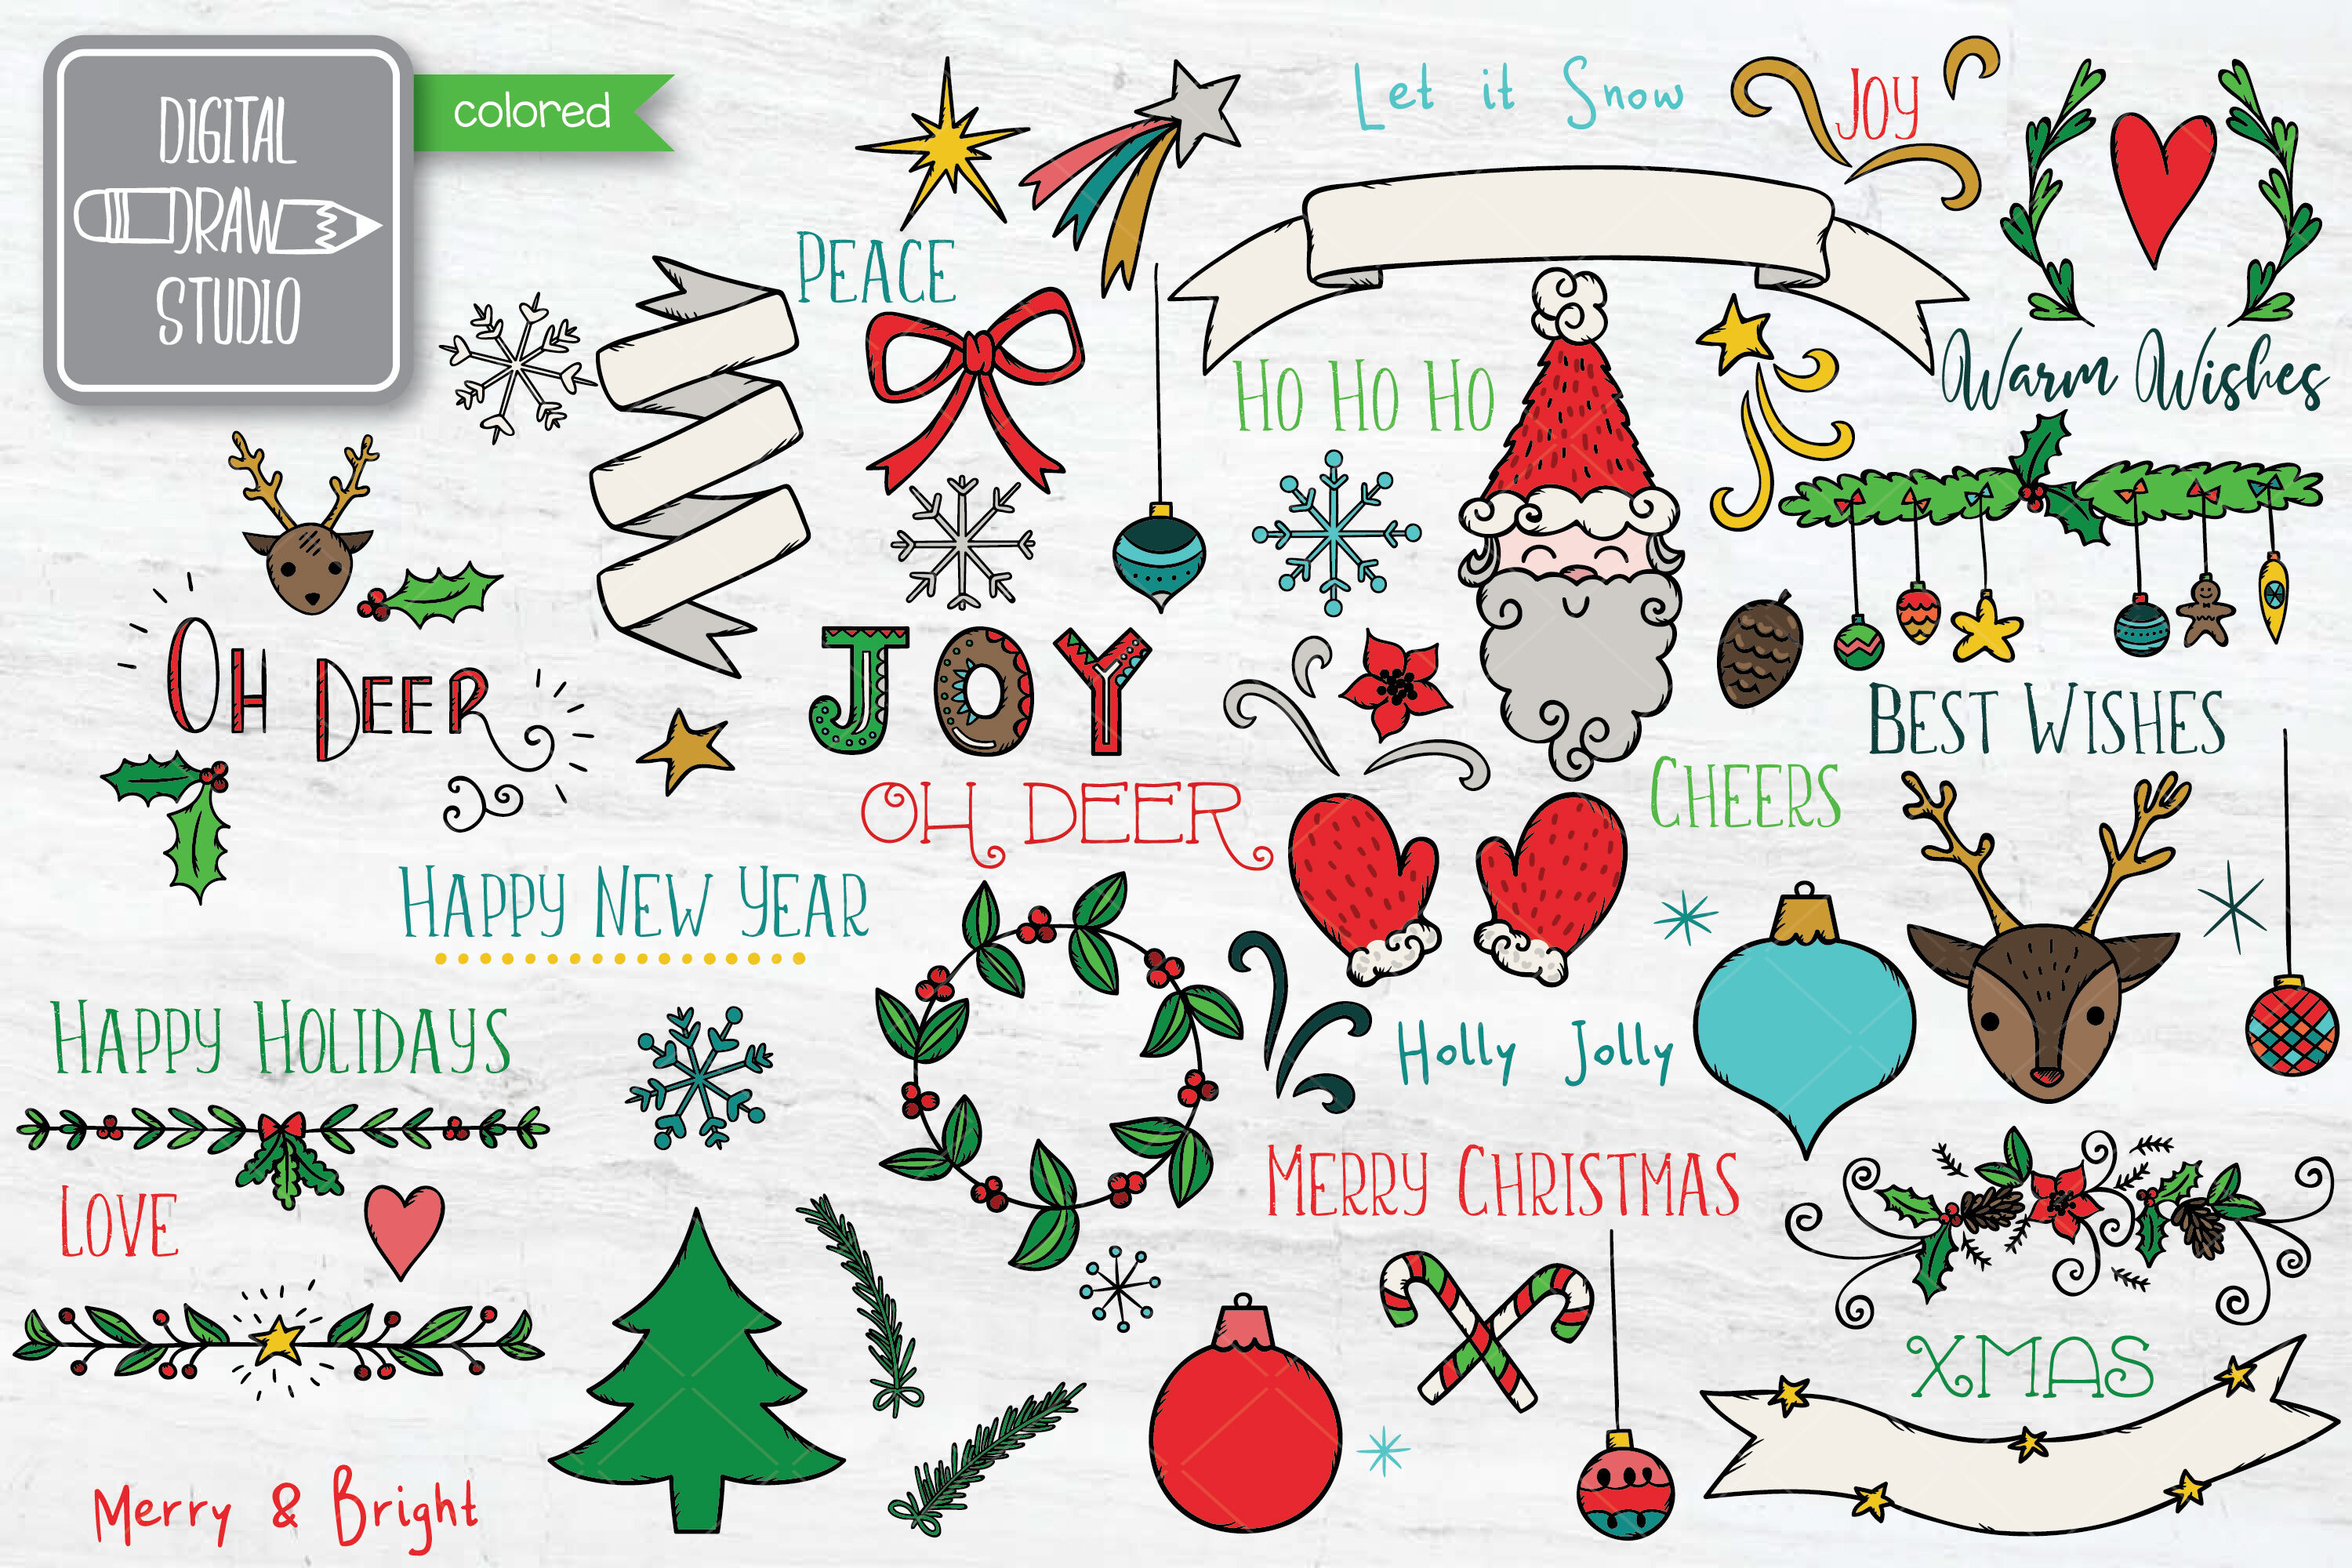 Christmas Elements Color Hand Drawn Ornaments Decorative Holiday By Digital Draw Studio Thehungryjpeg Com